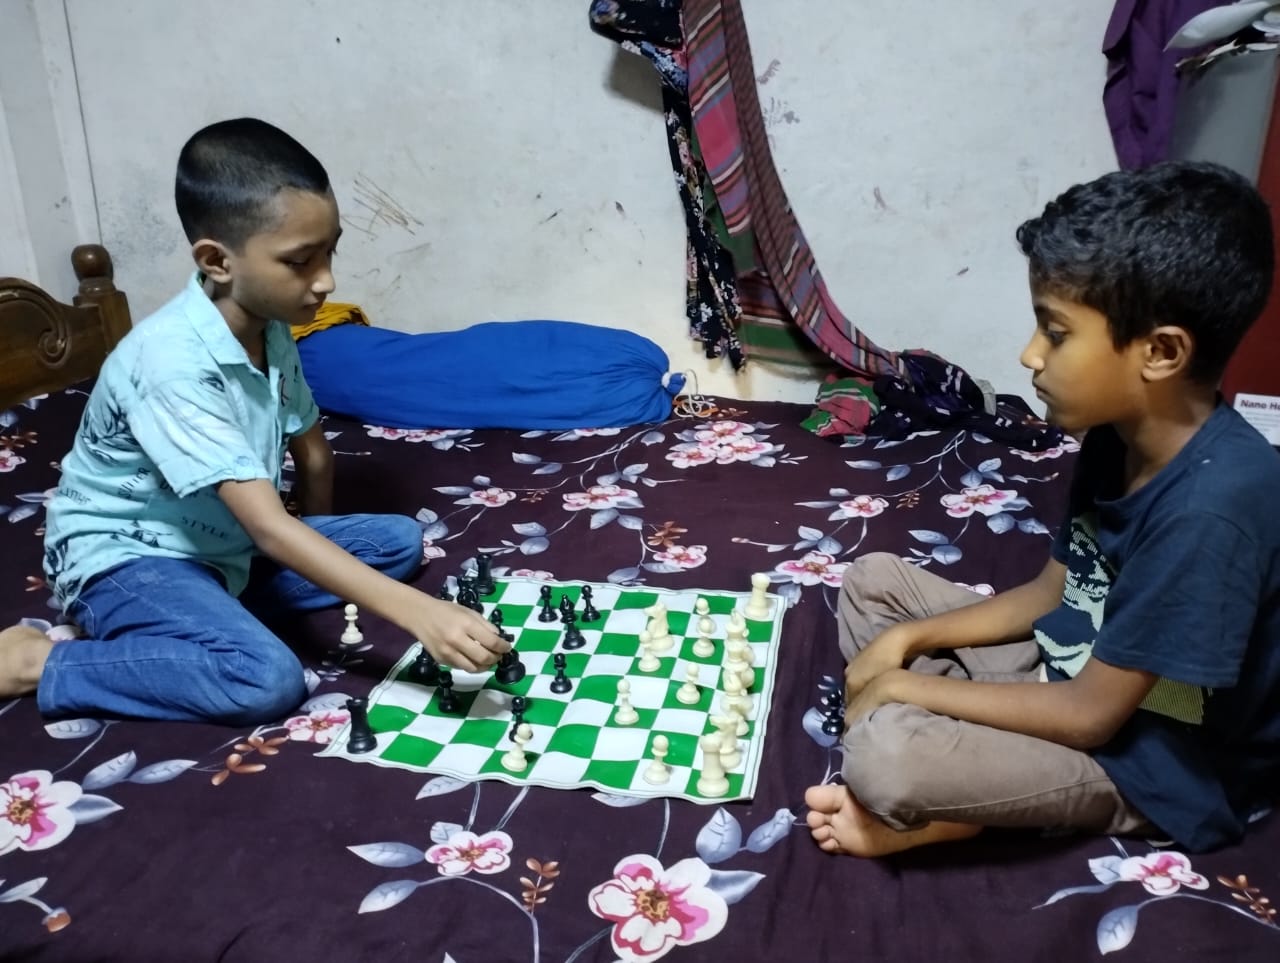 Abdullah and Romjan playing chess